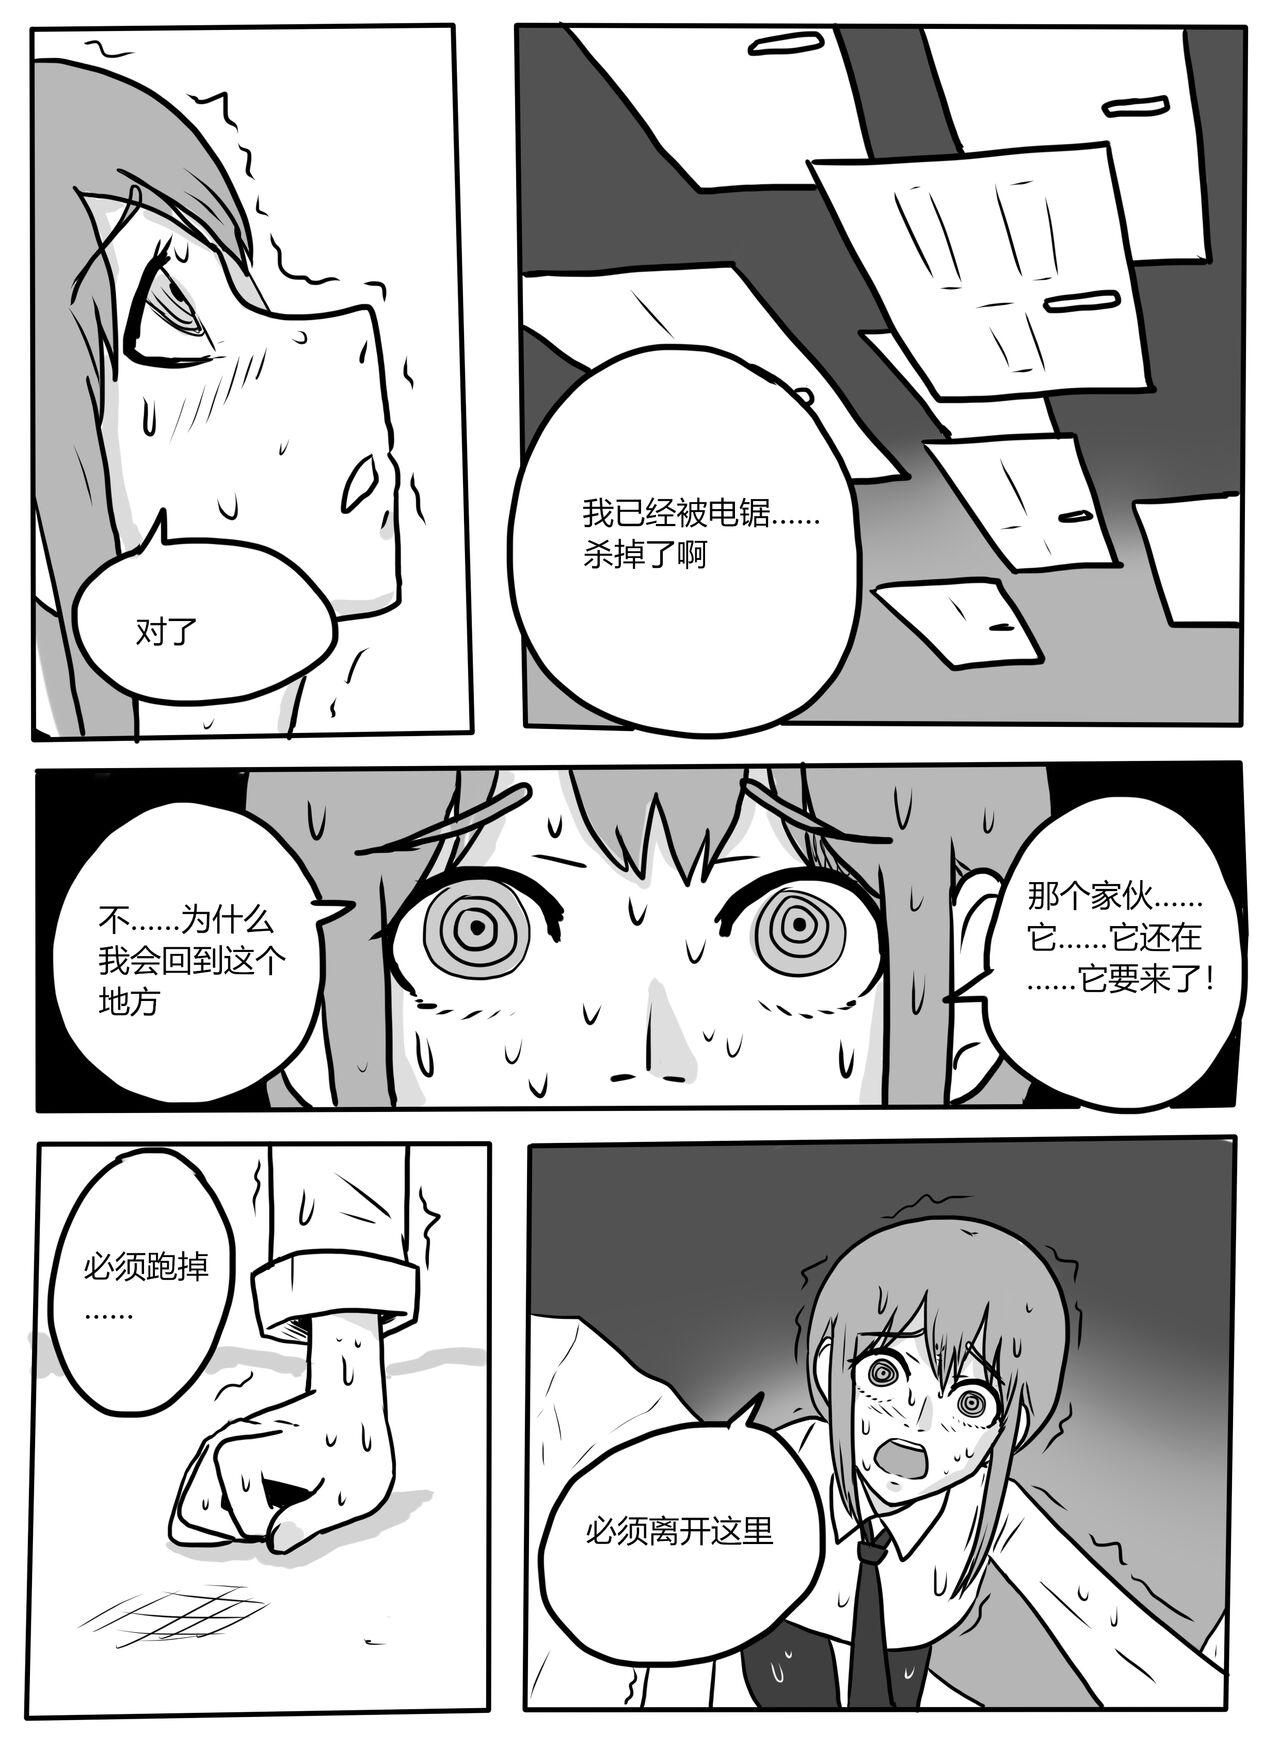 Metendo Makima tk manga - Chainsaw man Spying - Page 3